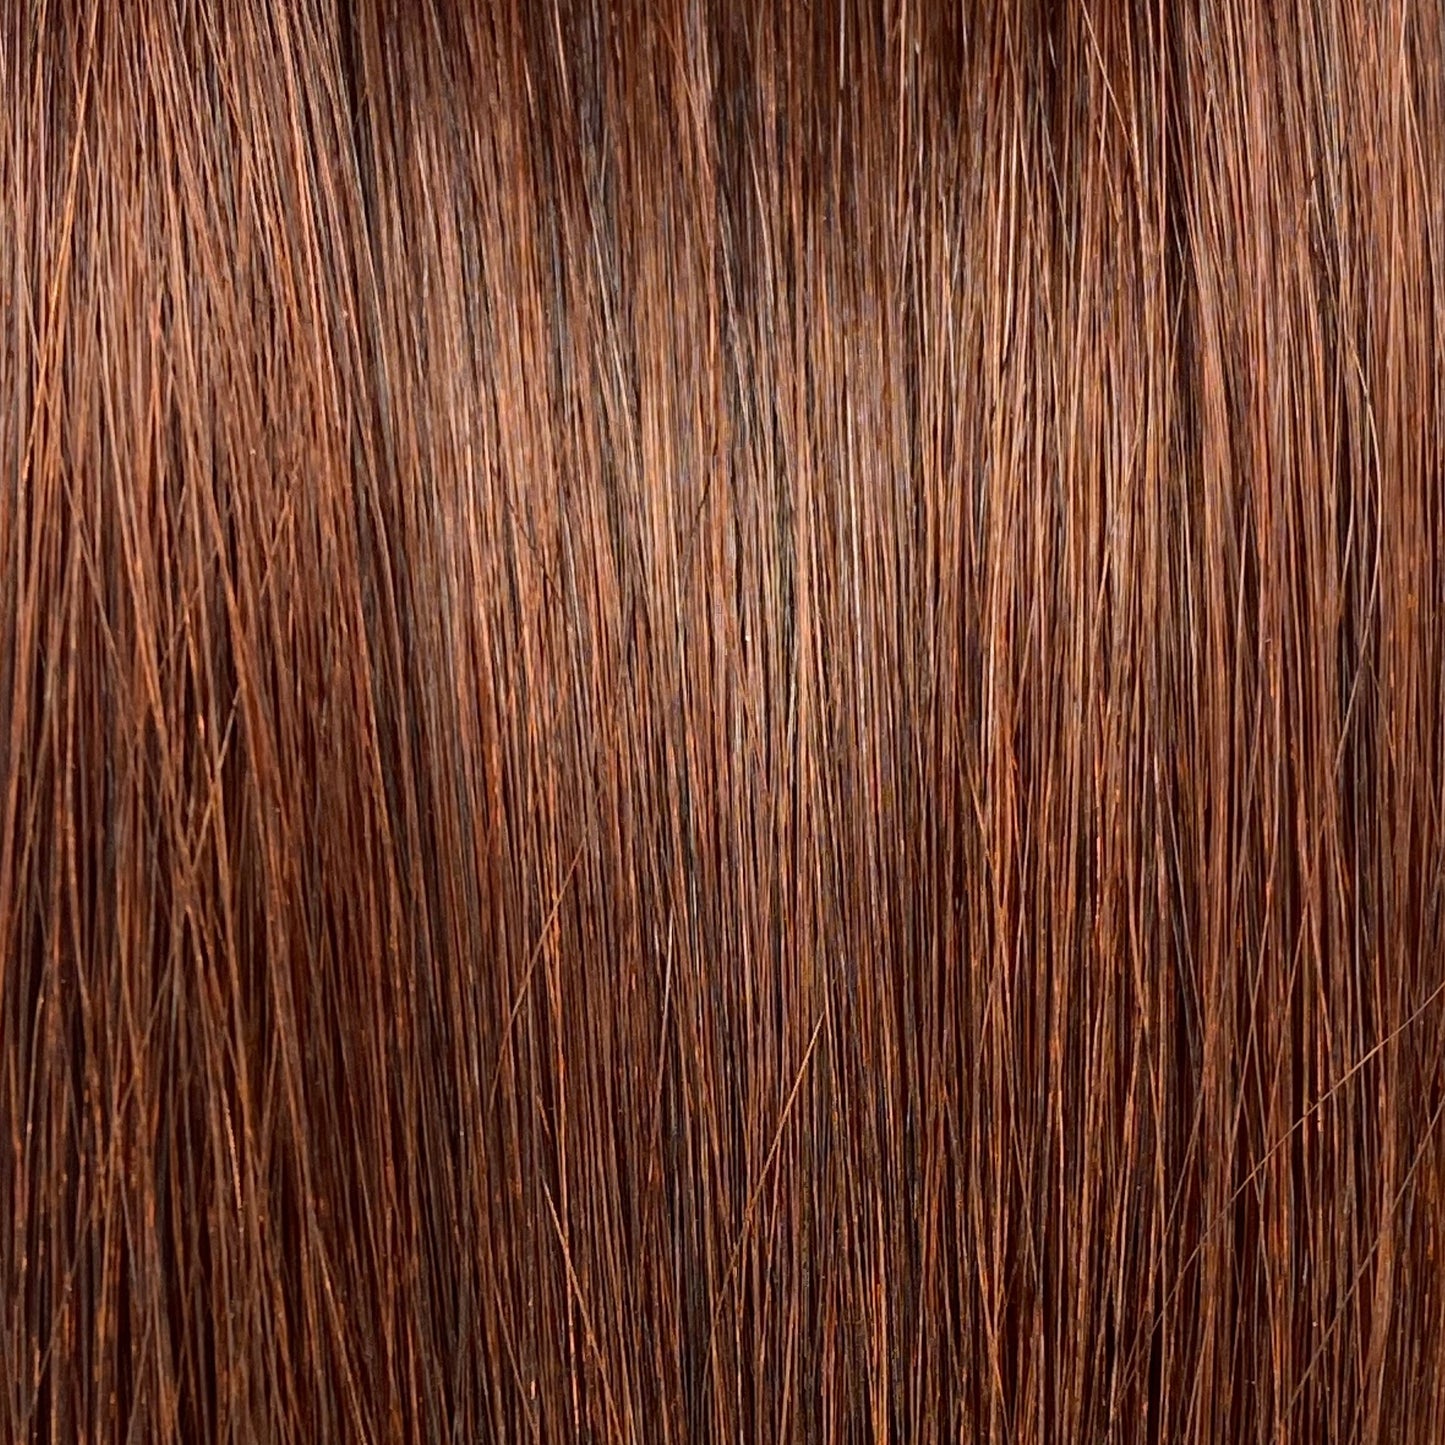 Fusion hair extensions #32 - 40cm/16 inches - Mahogany Chestnut Fusion Euro So Cap 